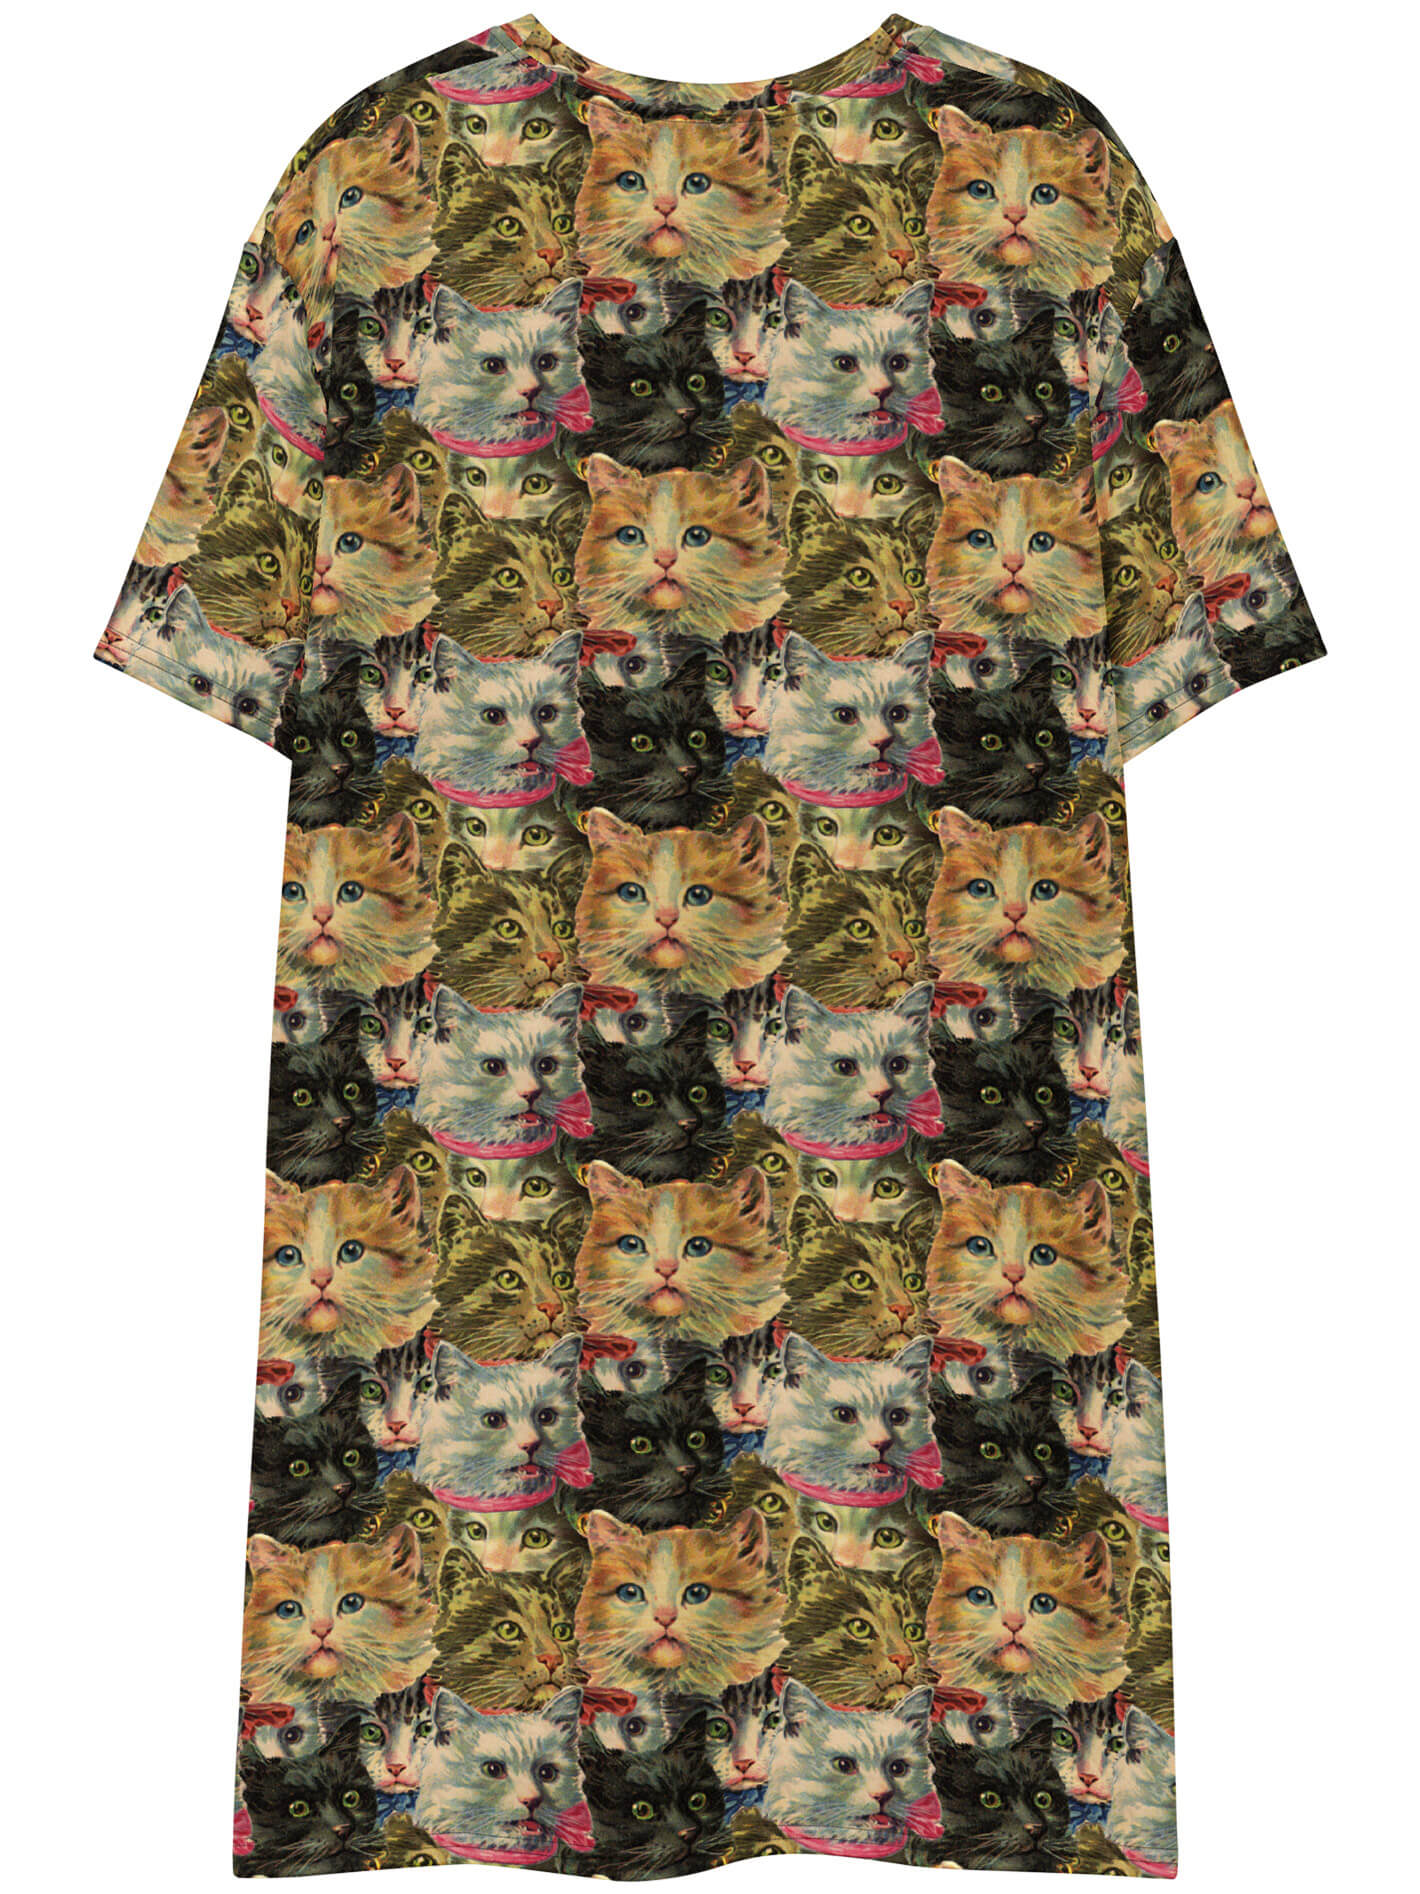 Plus size cat print dress.